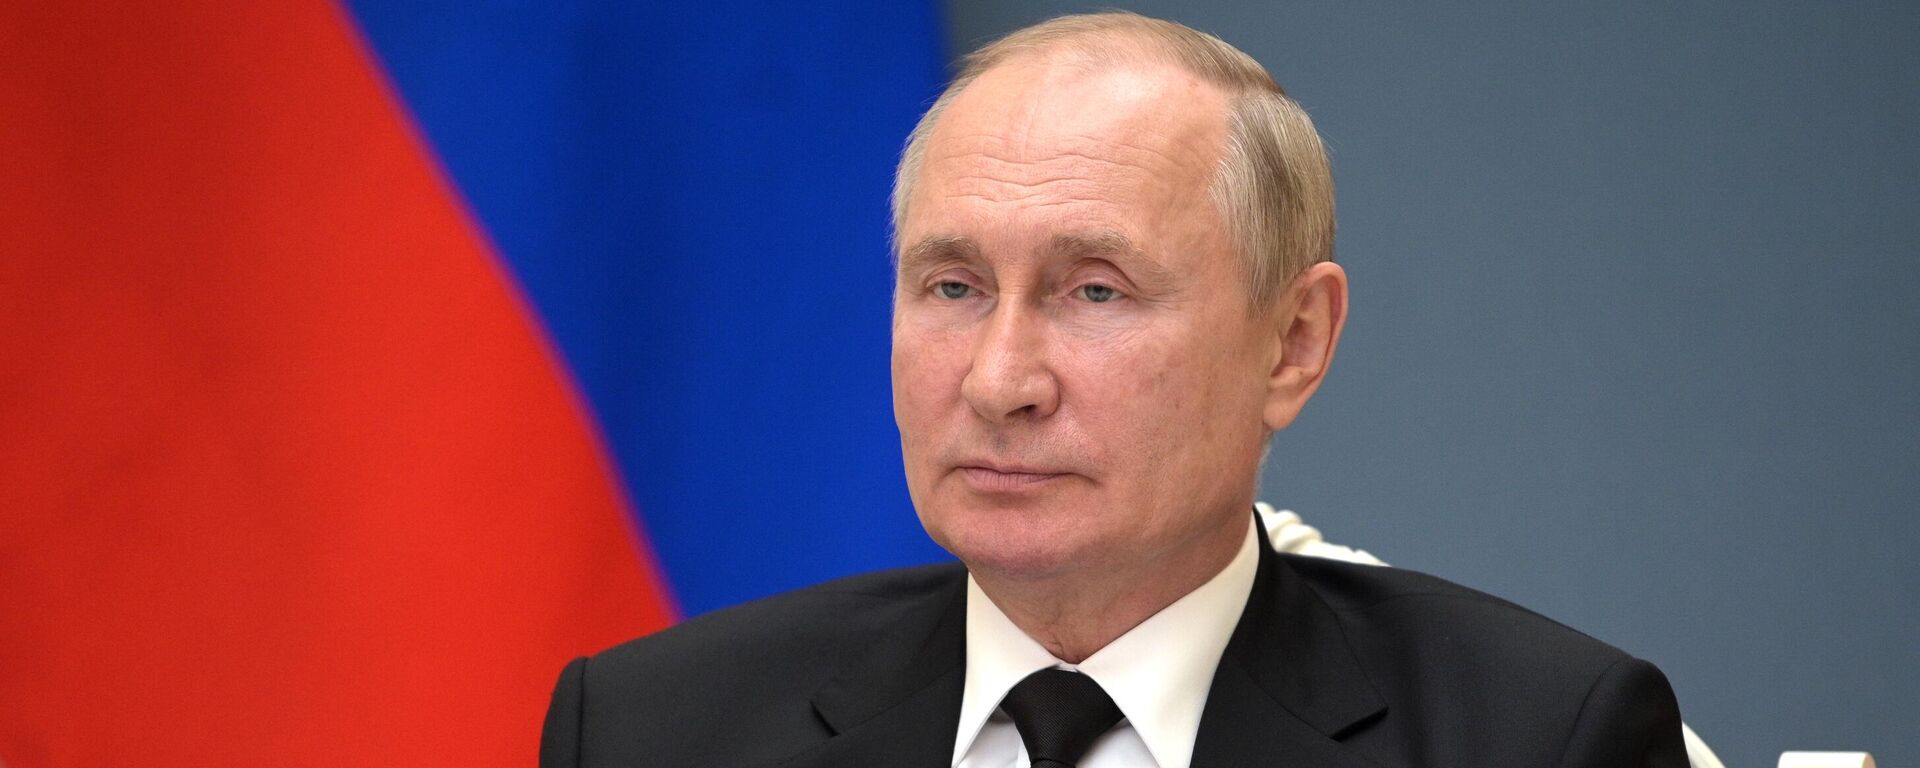 Rusijos prezidentas Vladimiras Putinas - Sputnik Lietuva, 1920, 05.10.2021